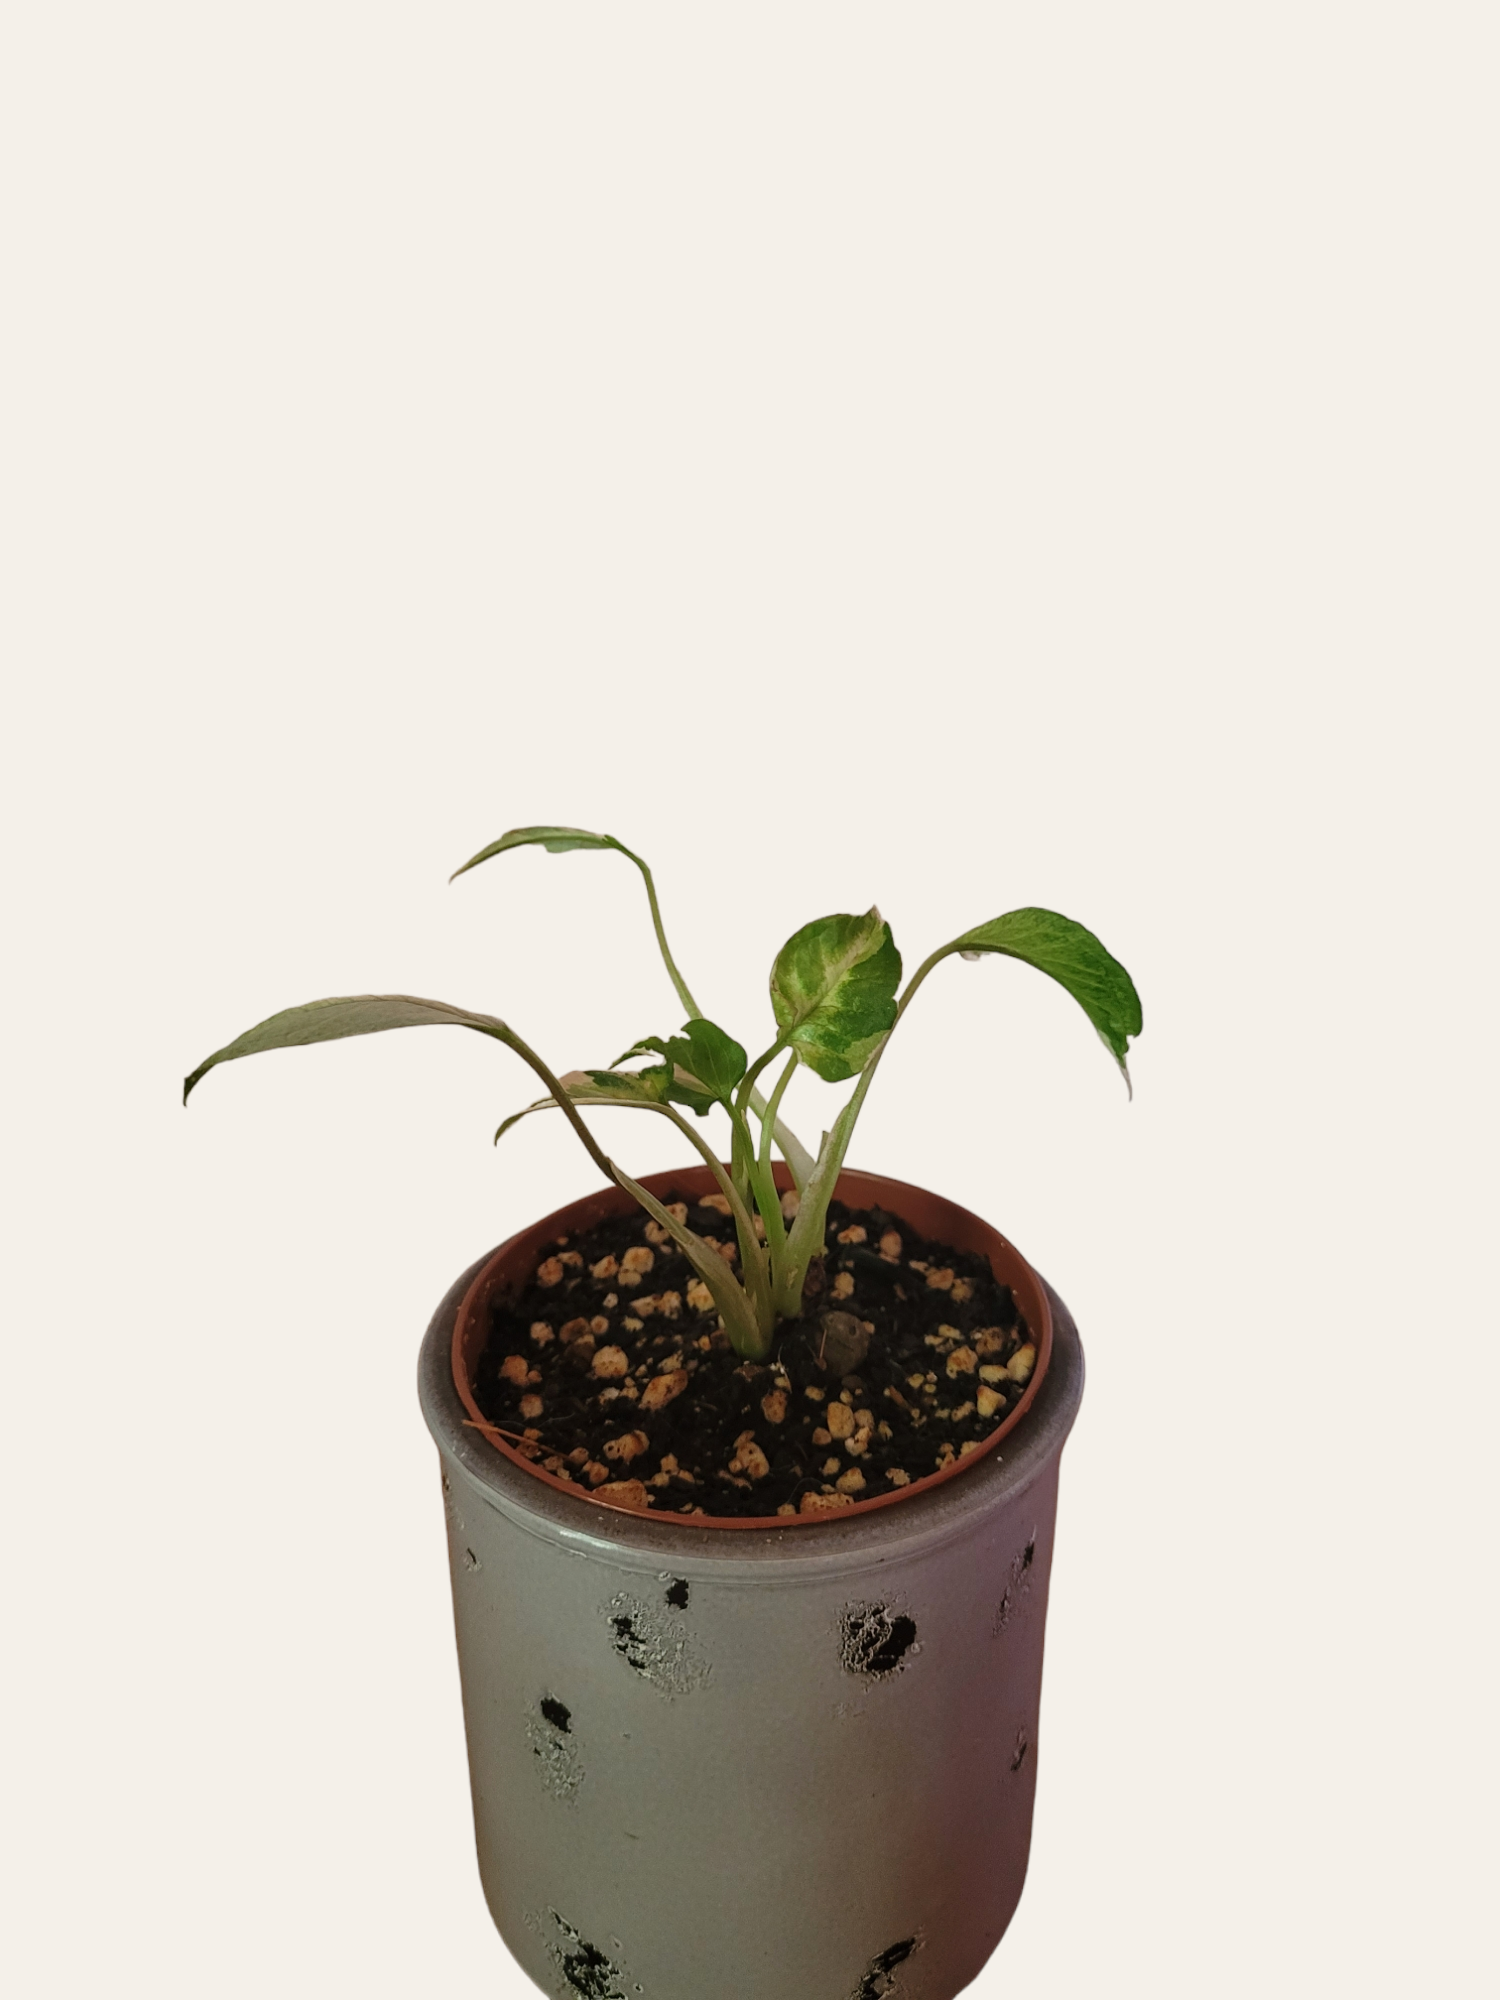 Syngonium Ngern laima variegata